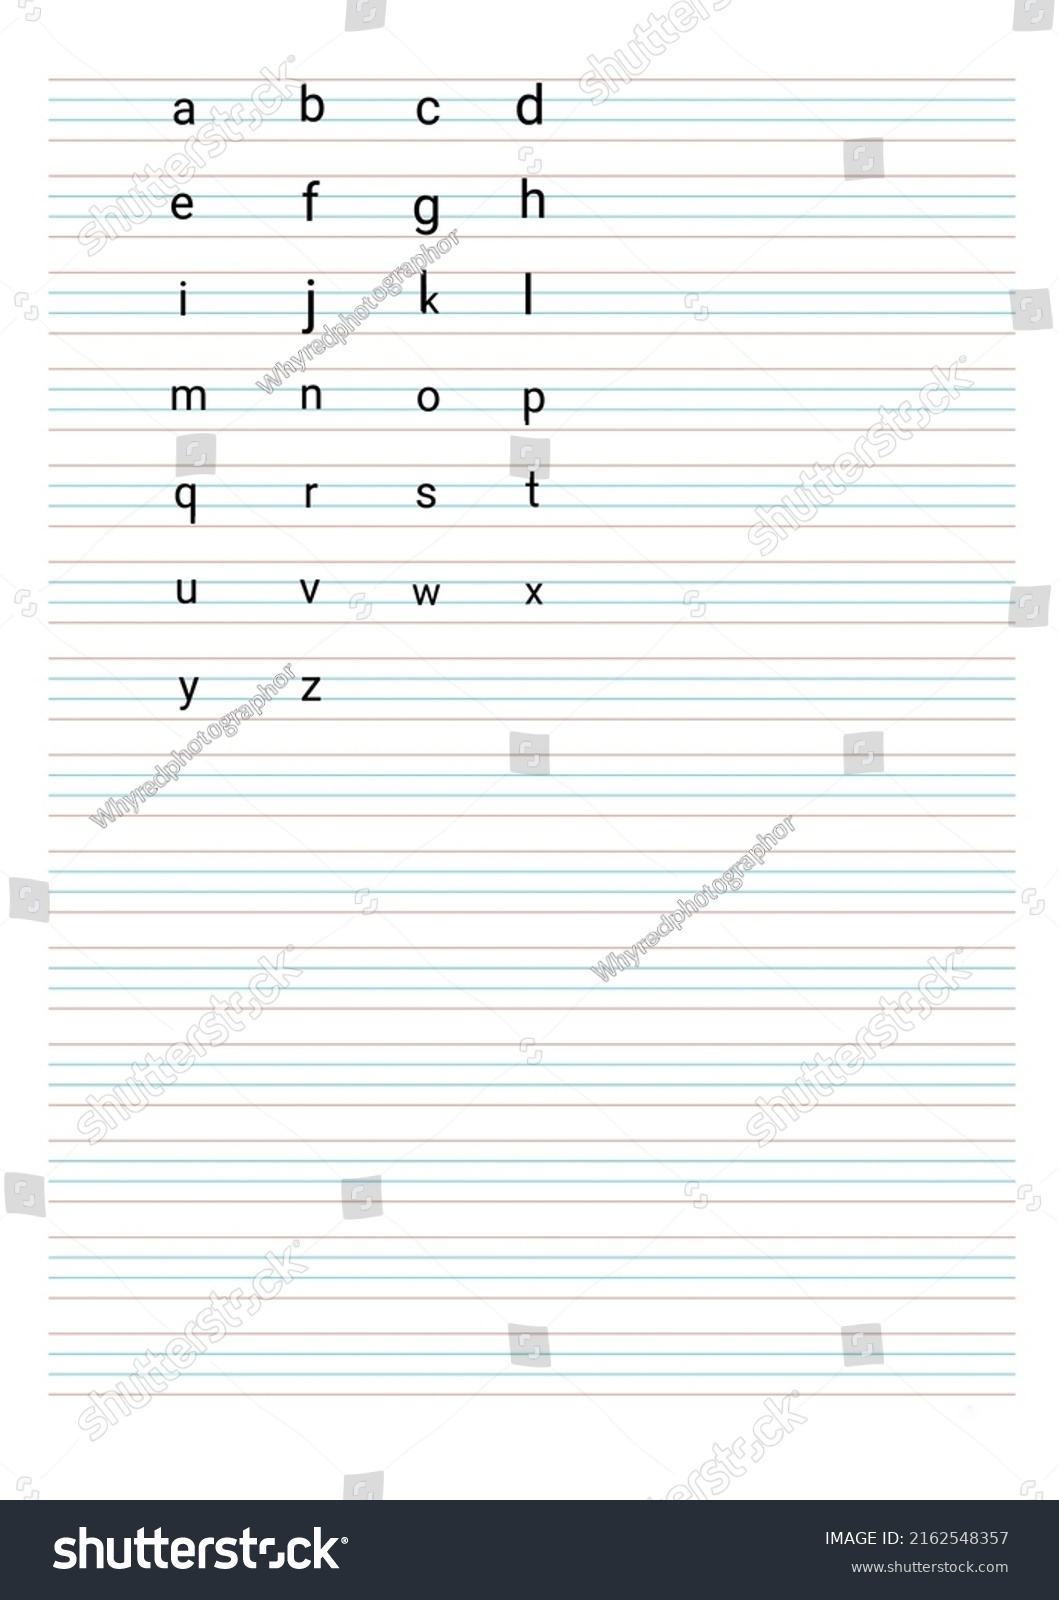 english-alphabets-4-line-how-write-stock-illustration-2162548357-shutterstock